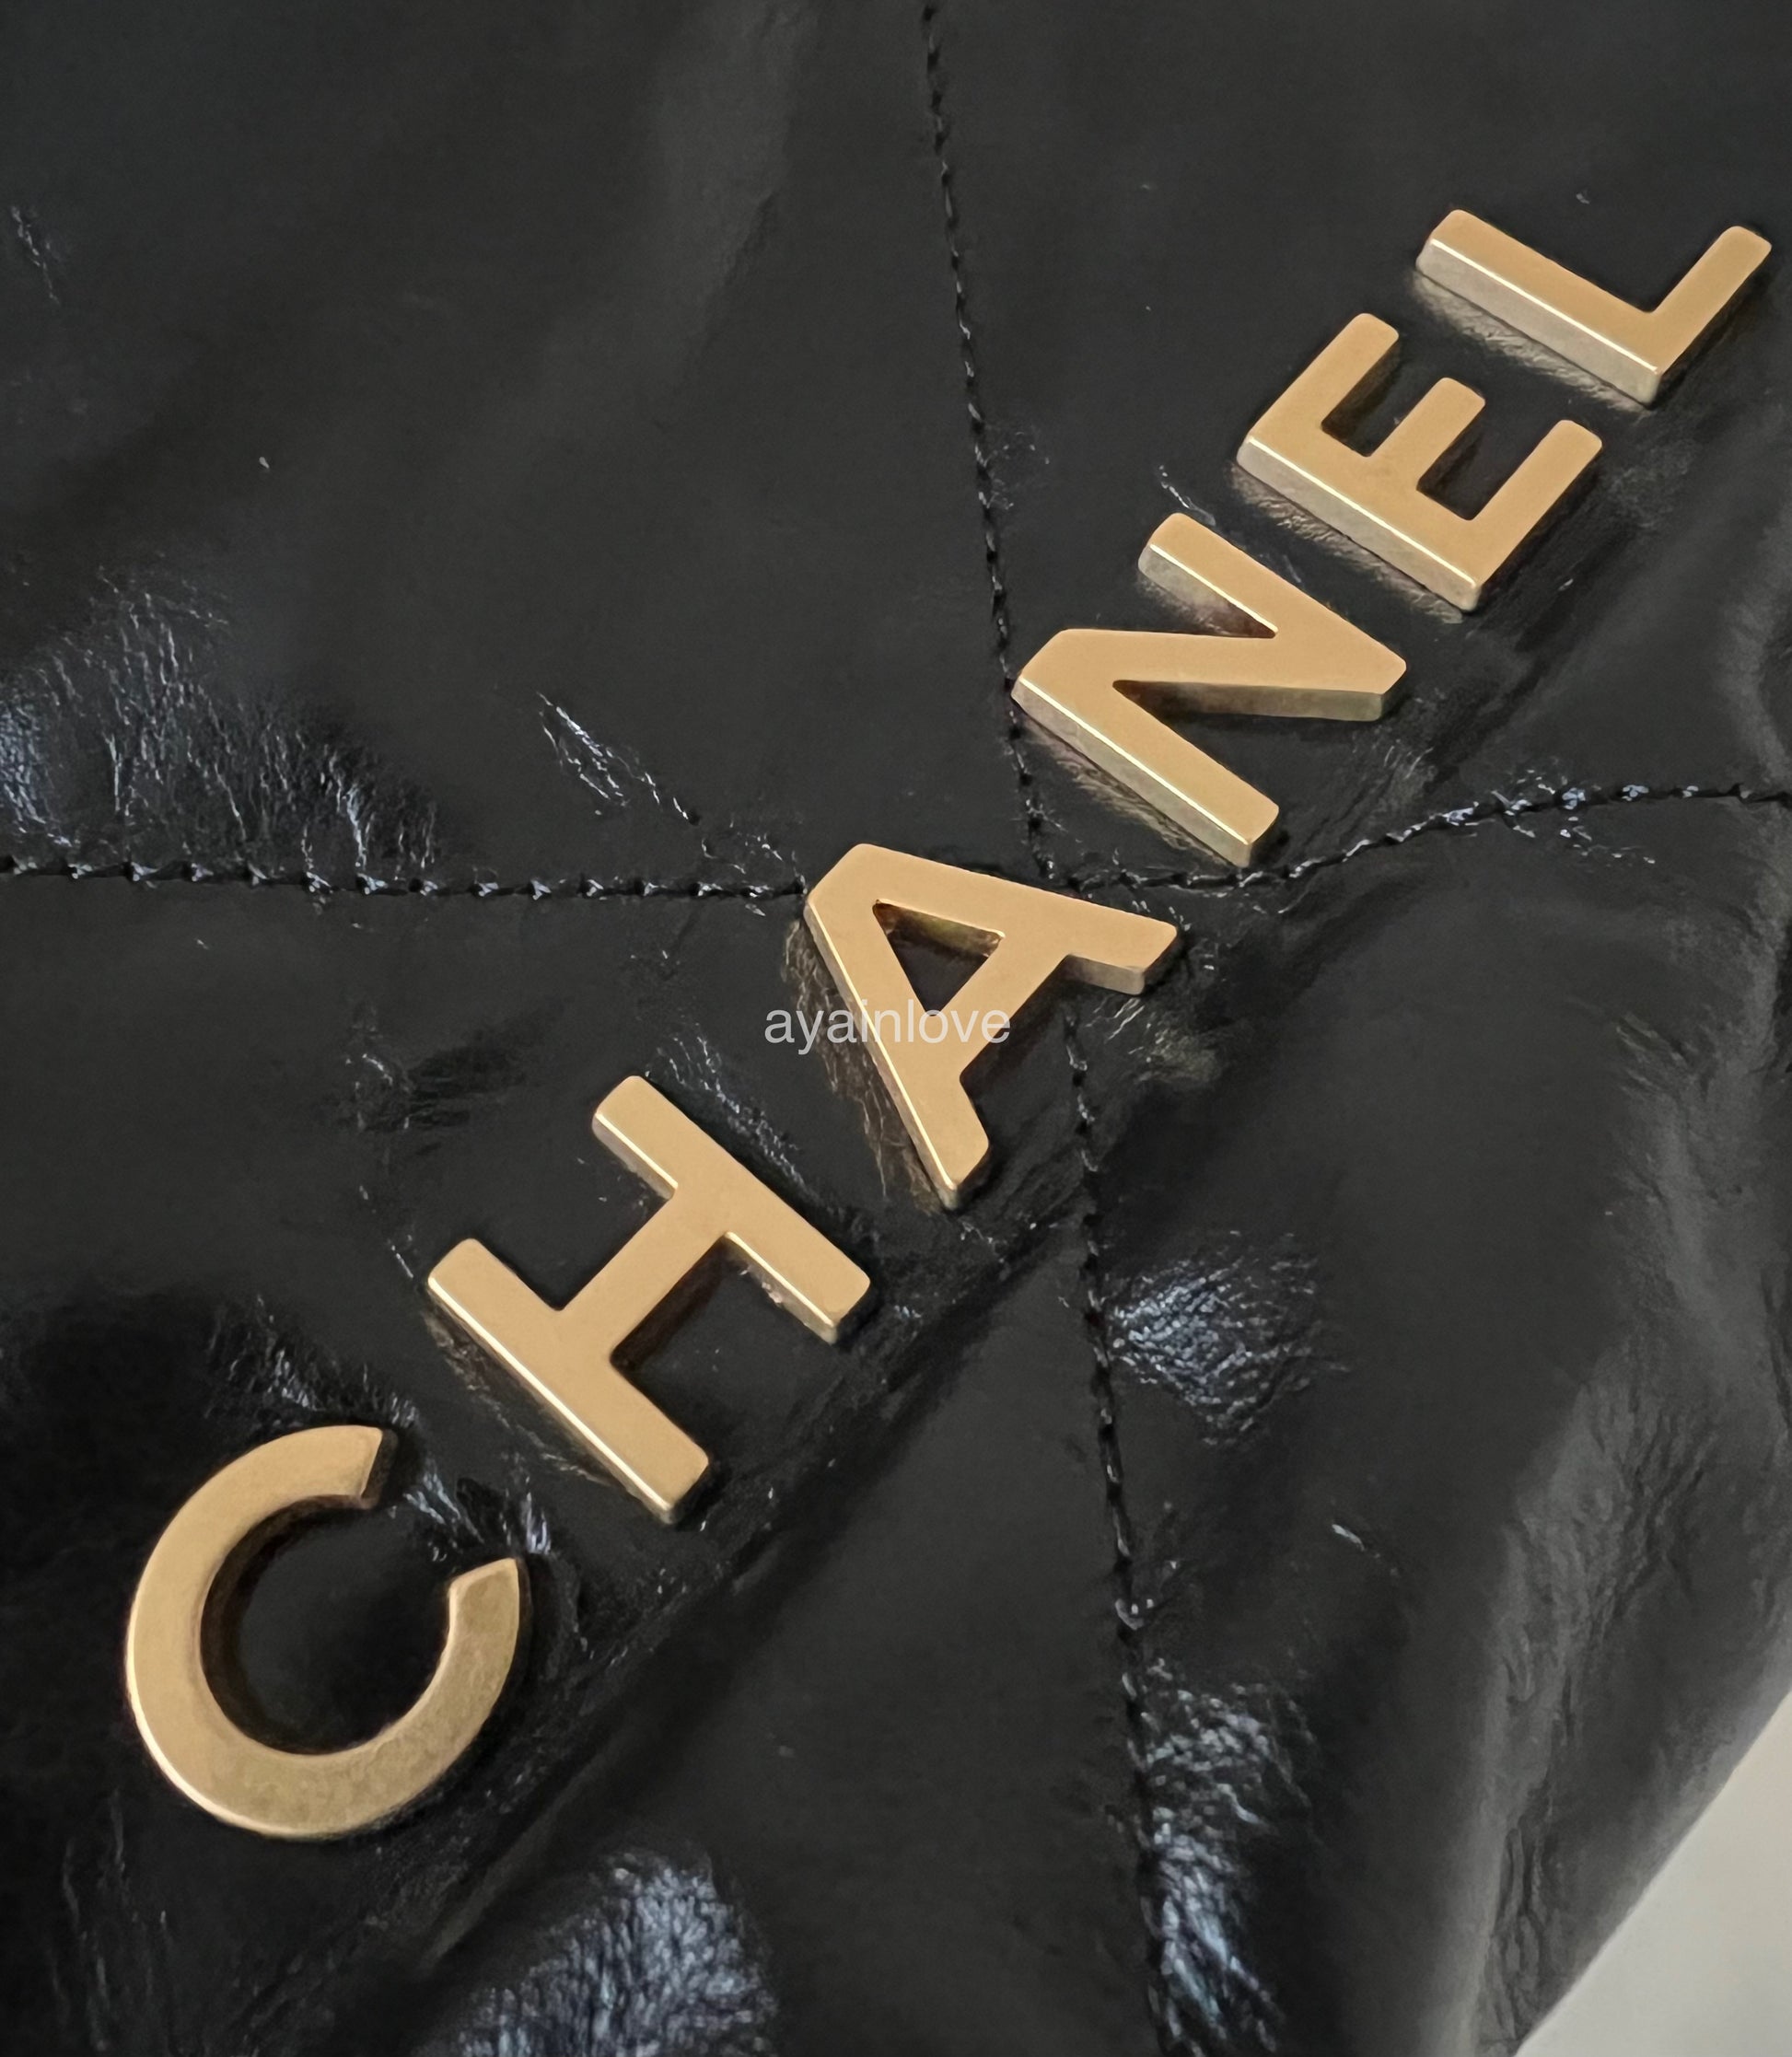 chanel black 19 bag